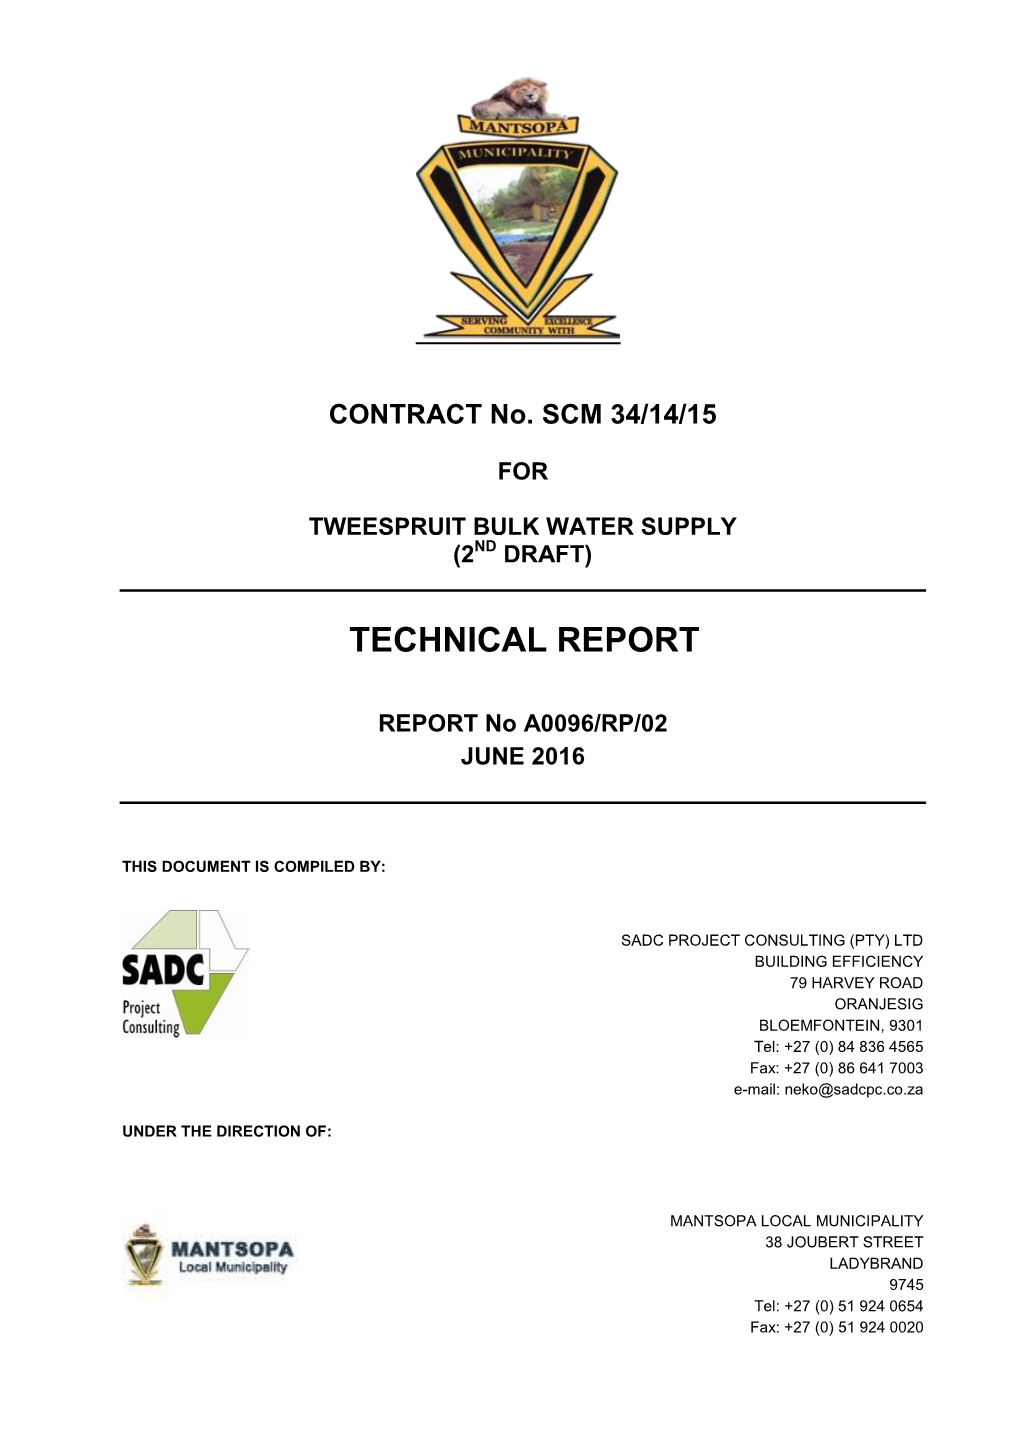 Tweespruit Technical Report 2016 Rev00 160606Nr.Pdf